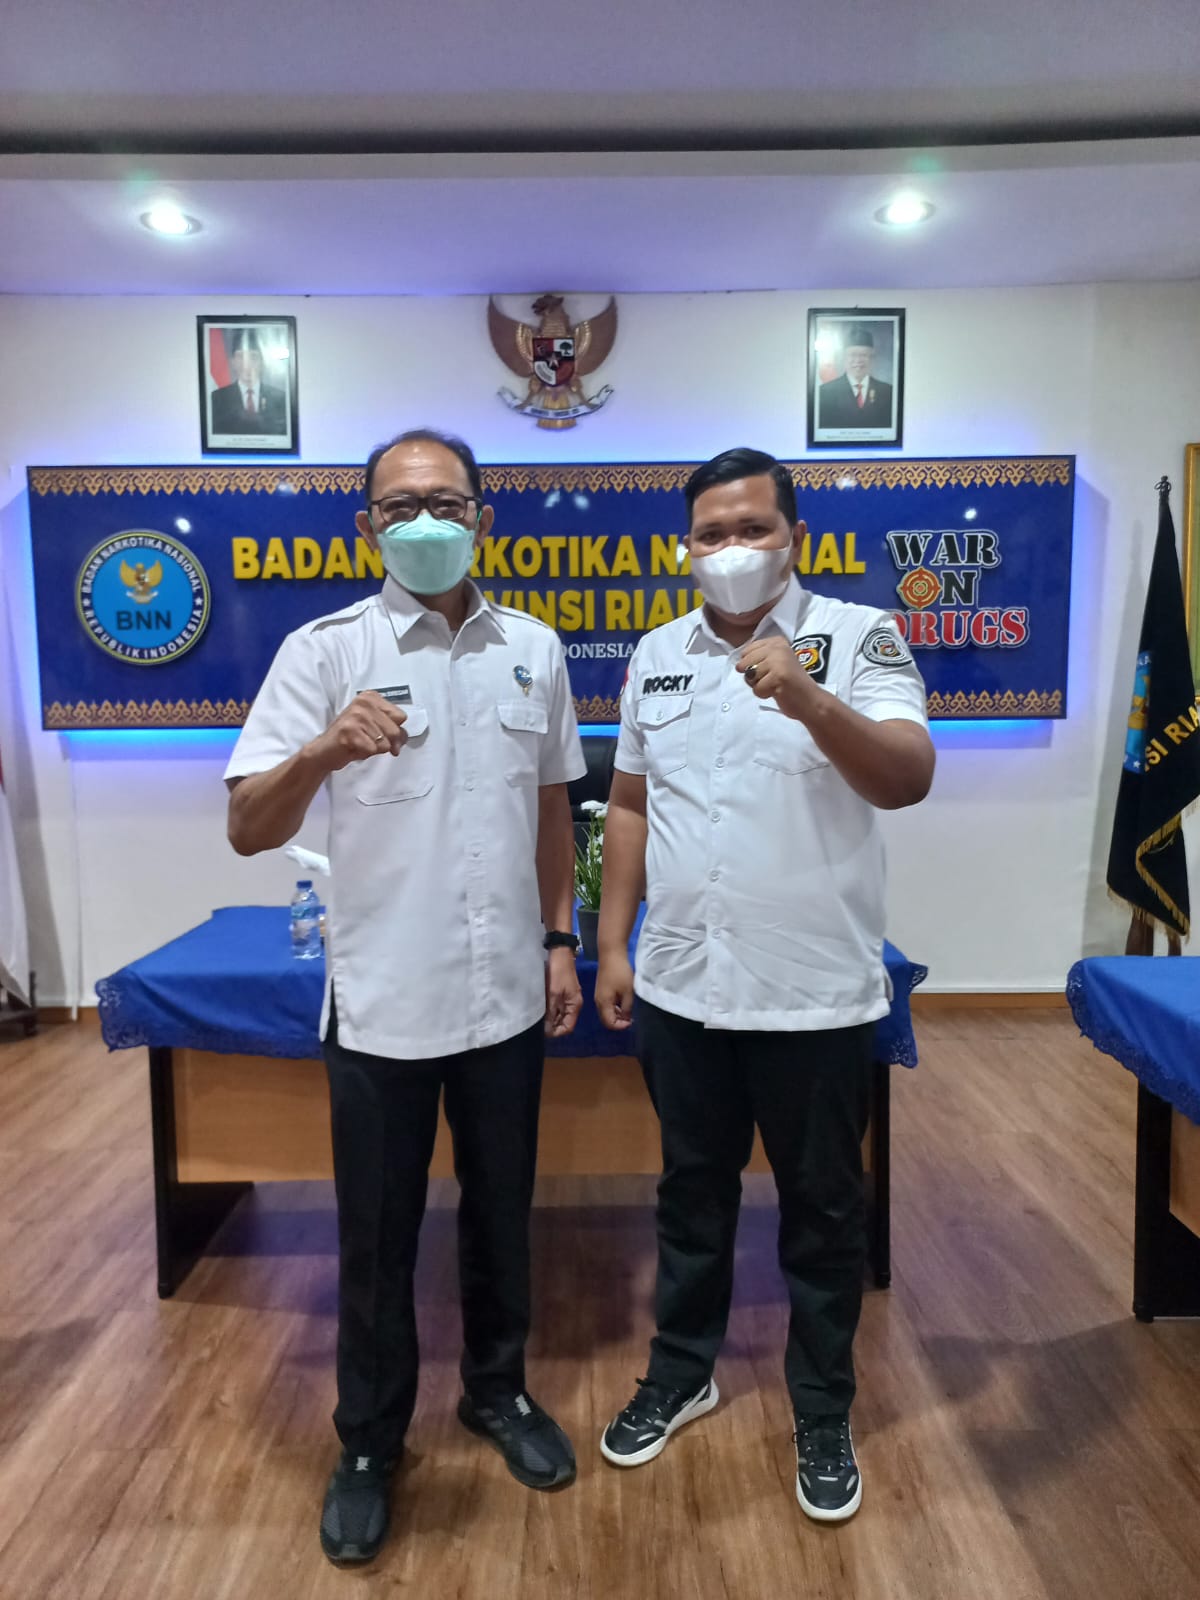 Riau Darurat Narkoba, Sahabat Polisi Indonesia Sambangi BNN 